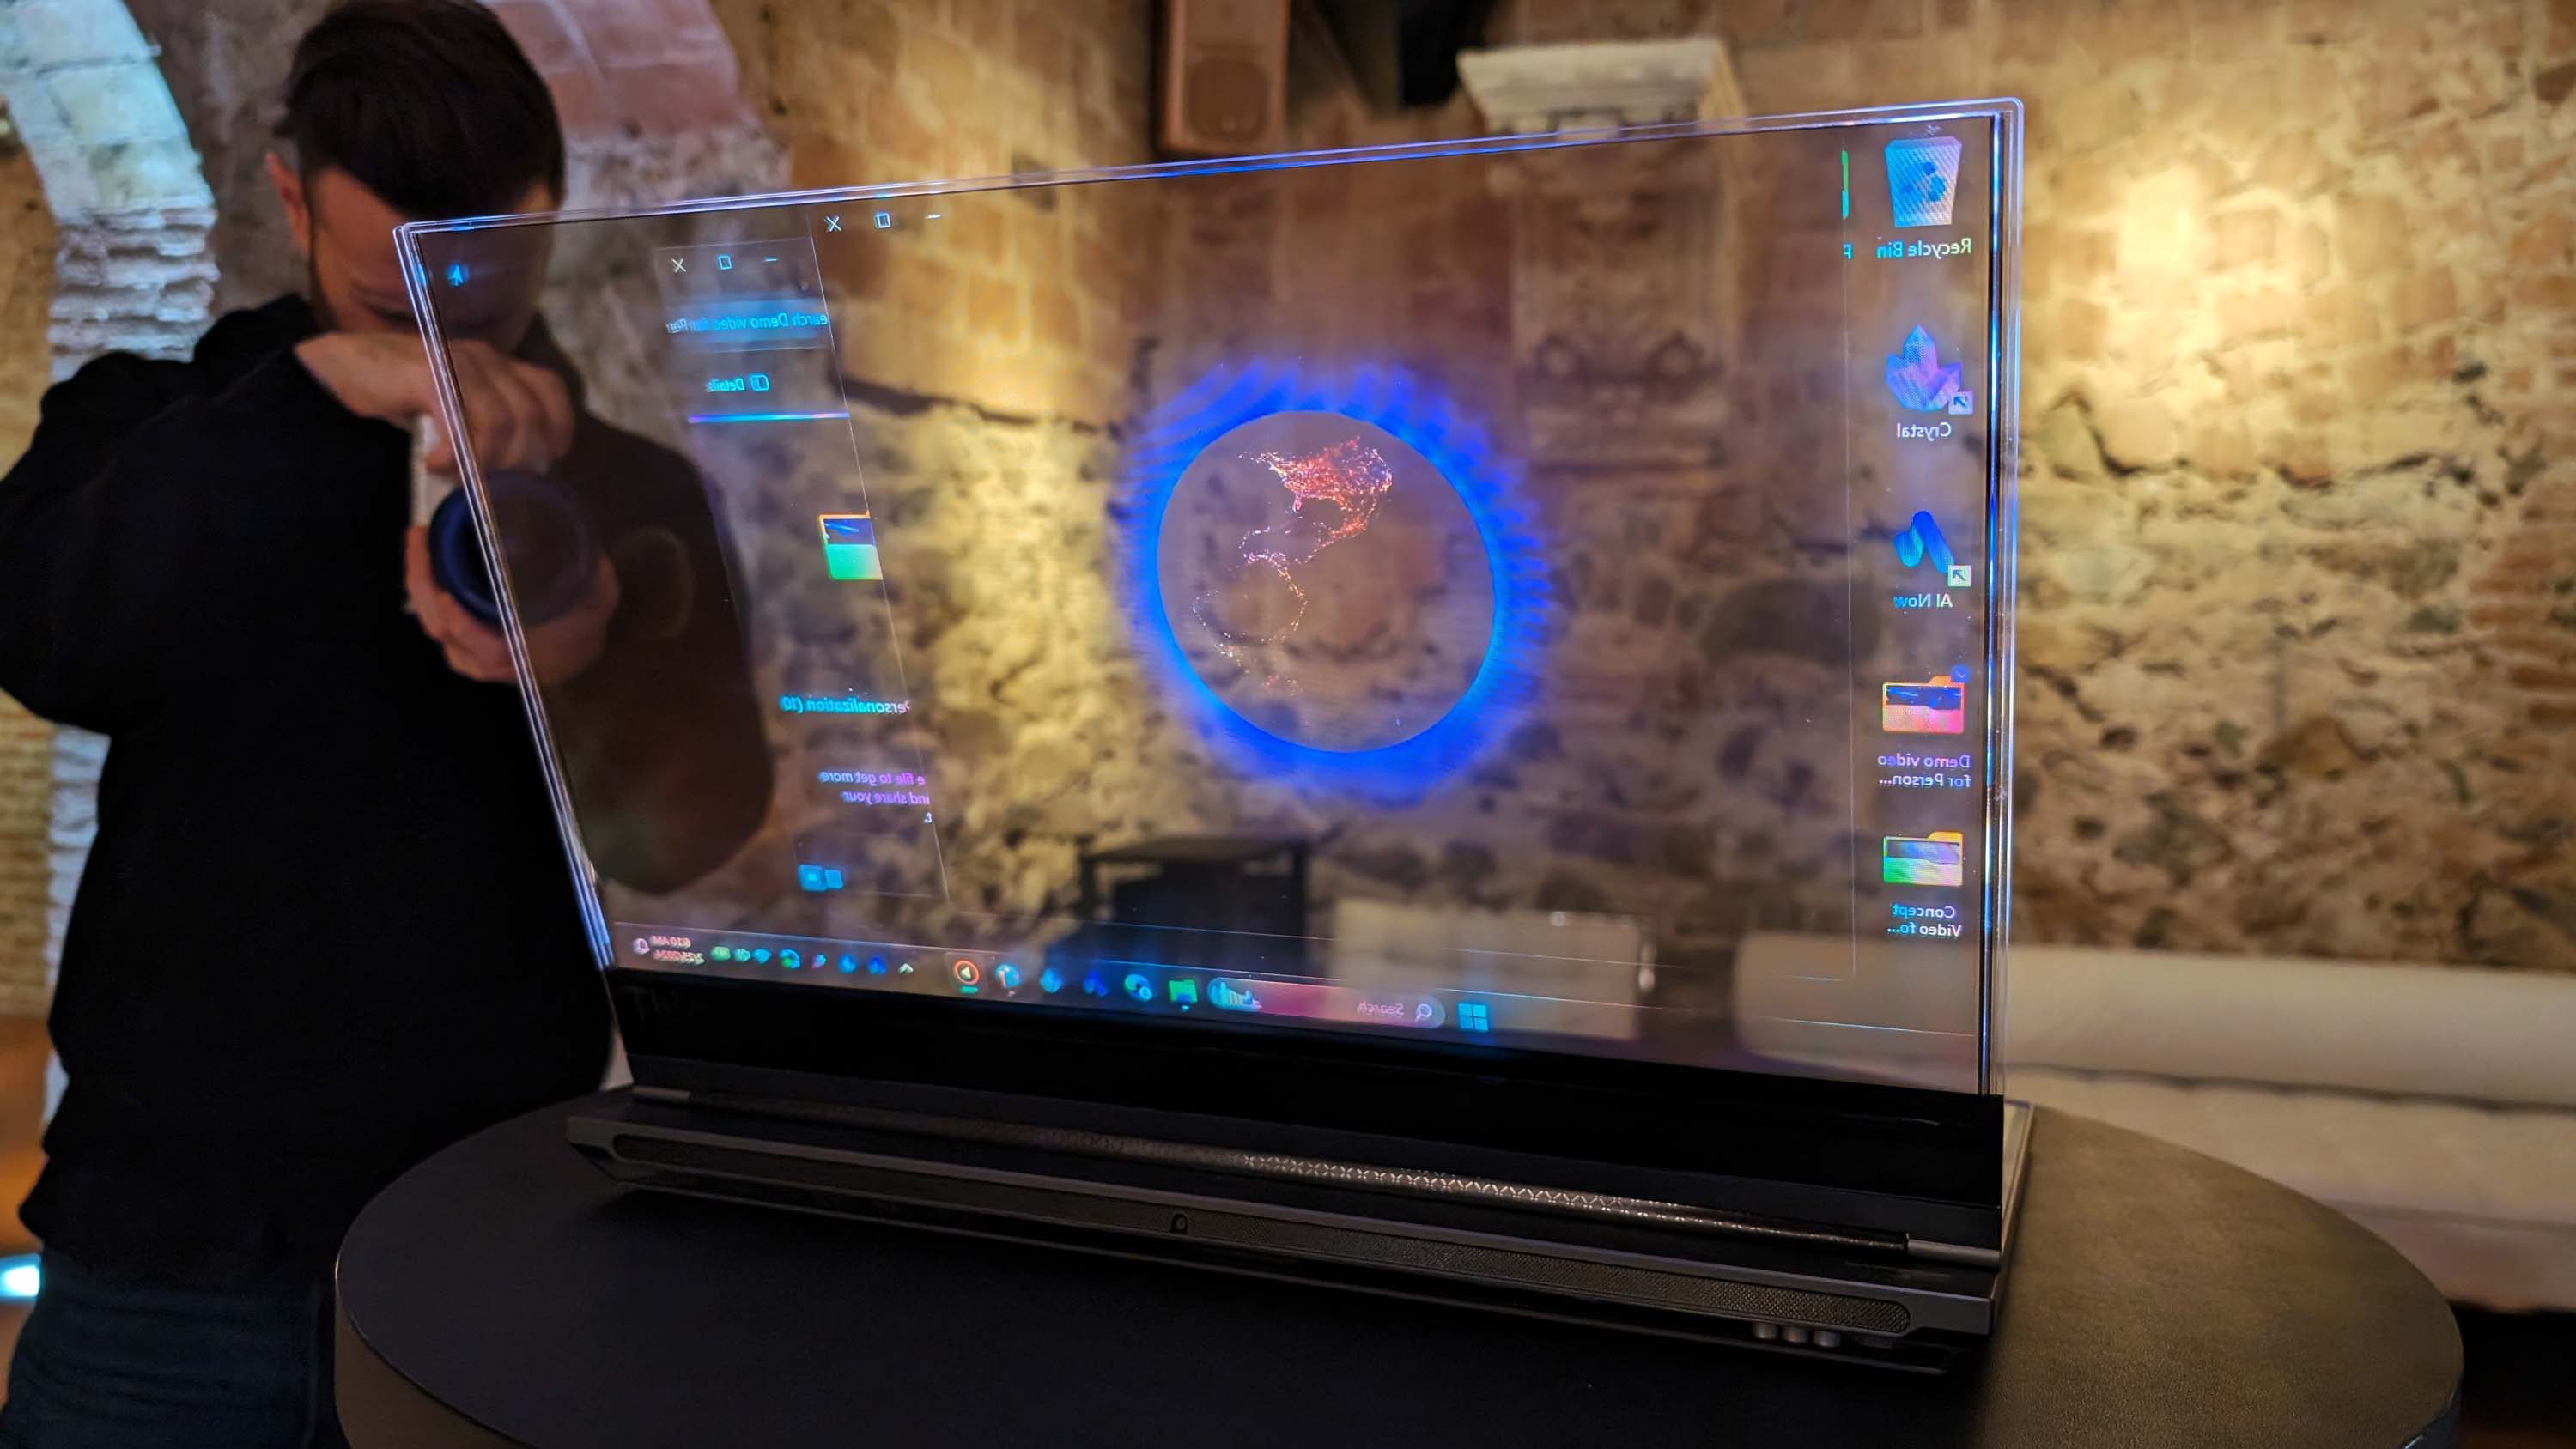 Lenov's proof-of-concept transparent PC